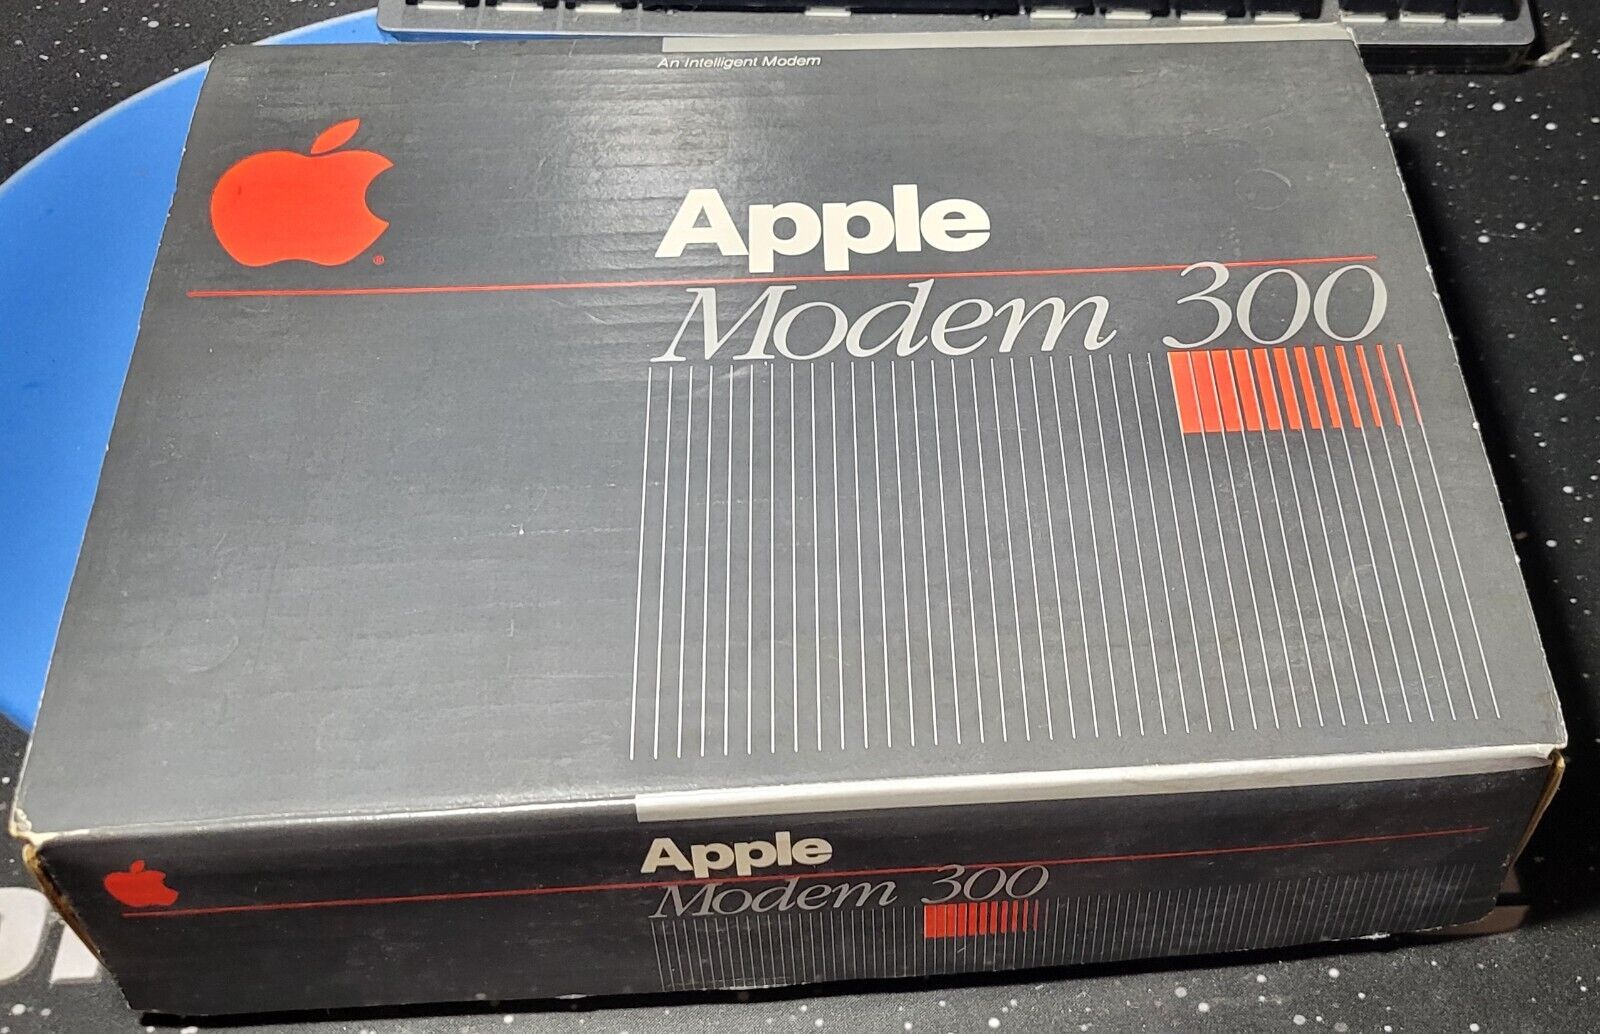 Vintage Original Apple Modem 300 A9M0300 Modem - Original Box, Looks Unused